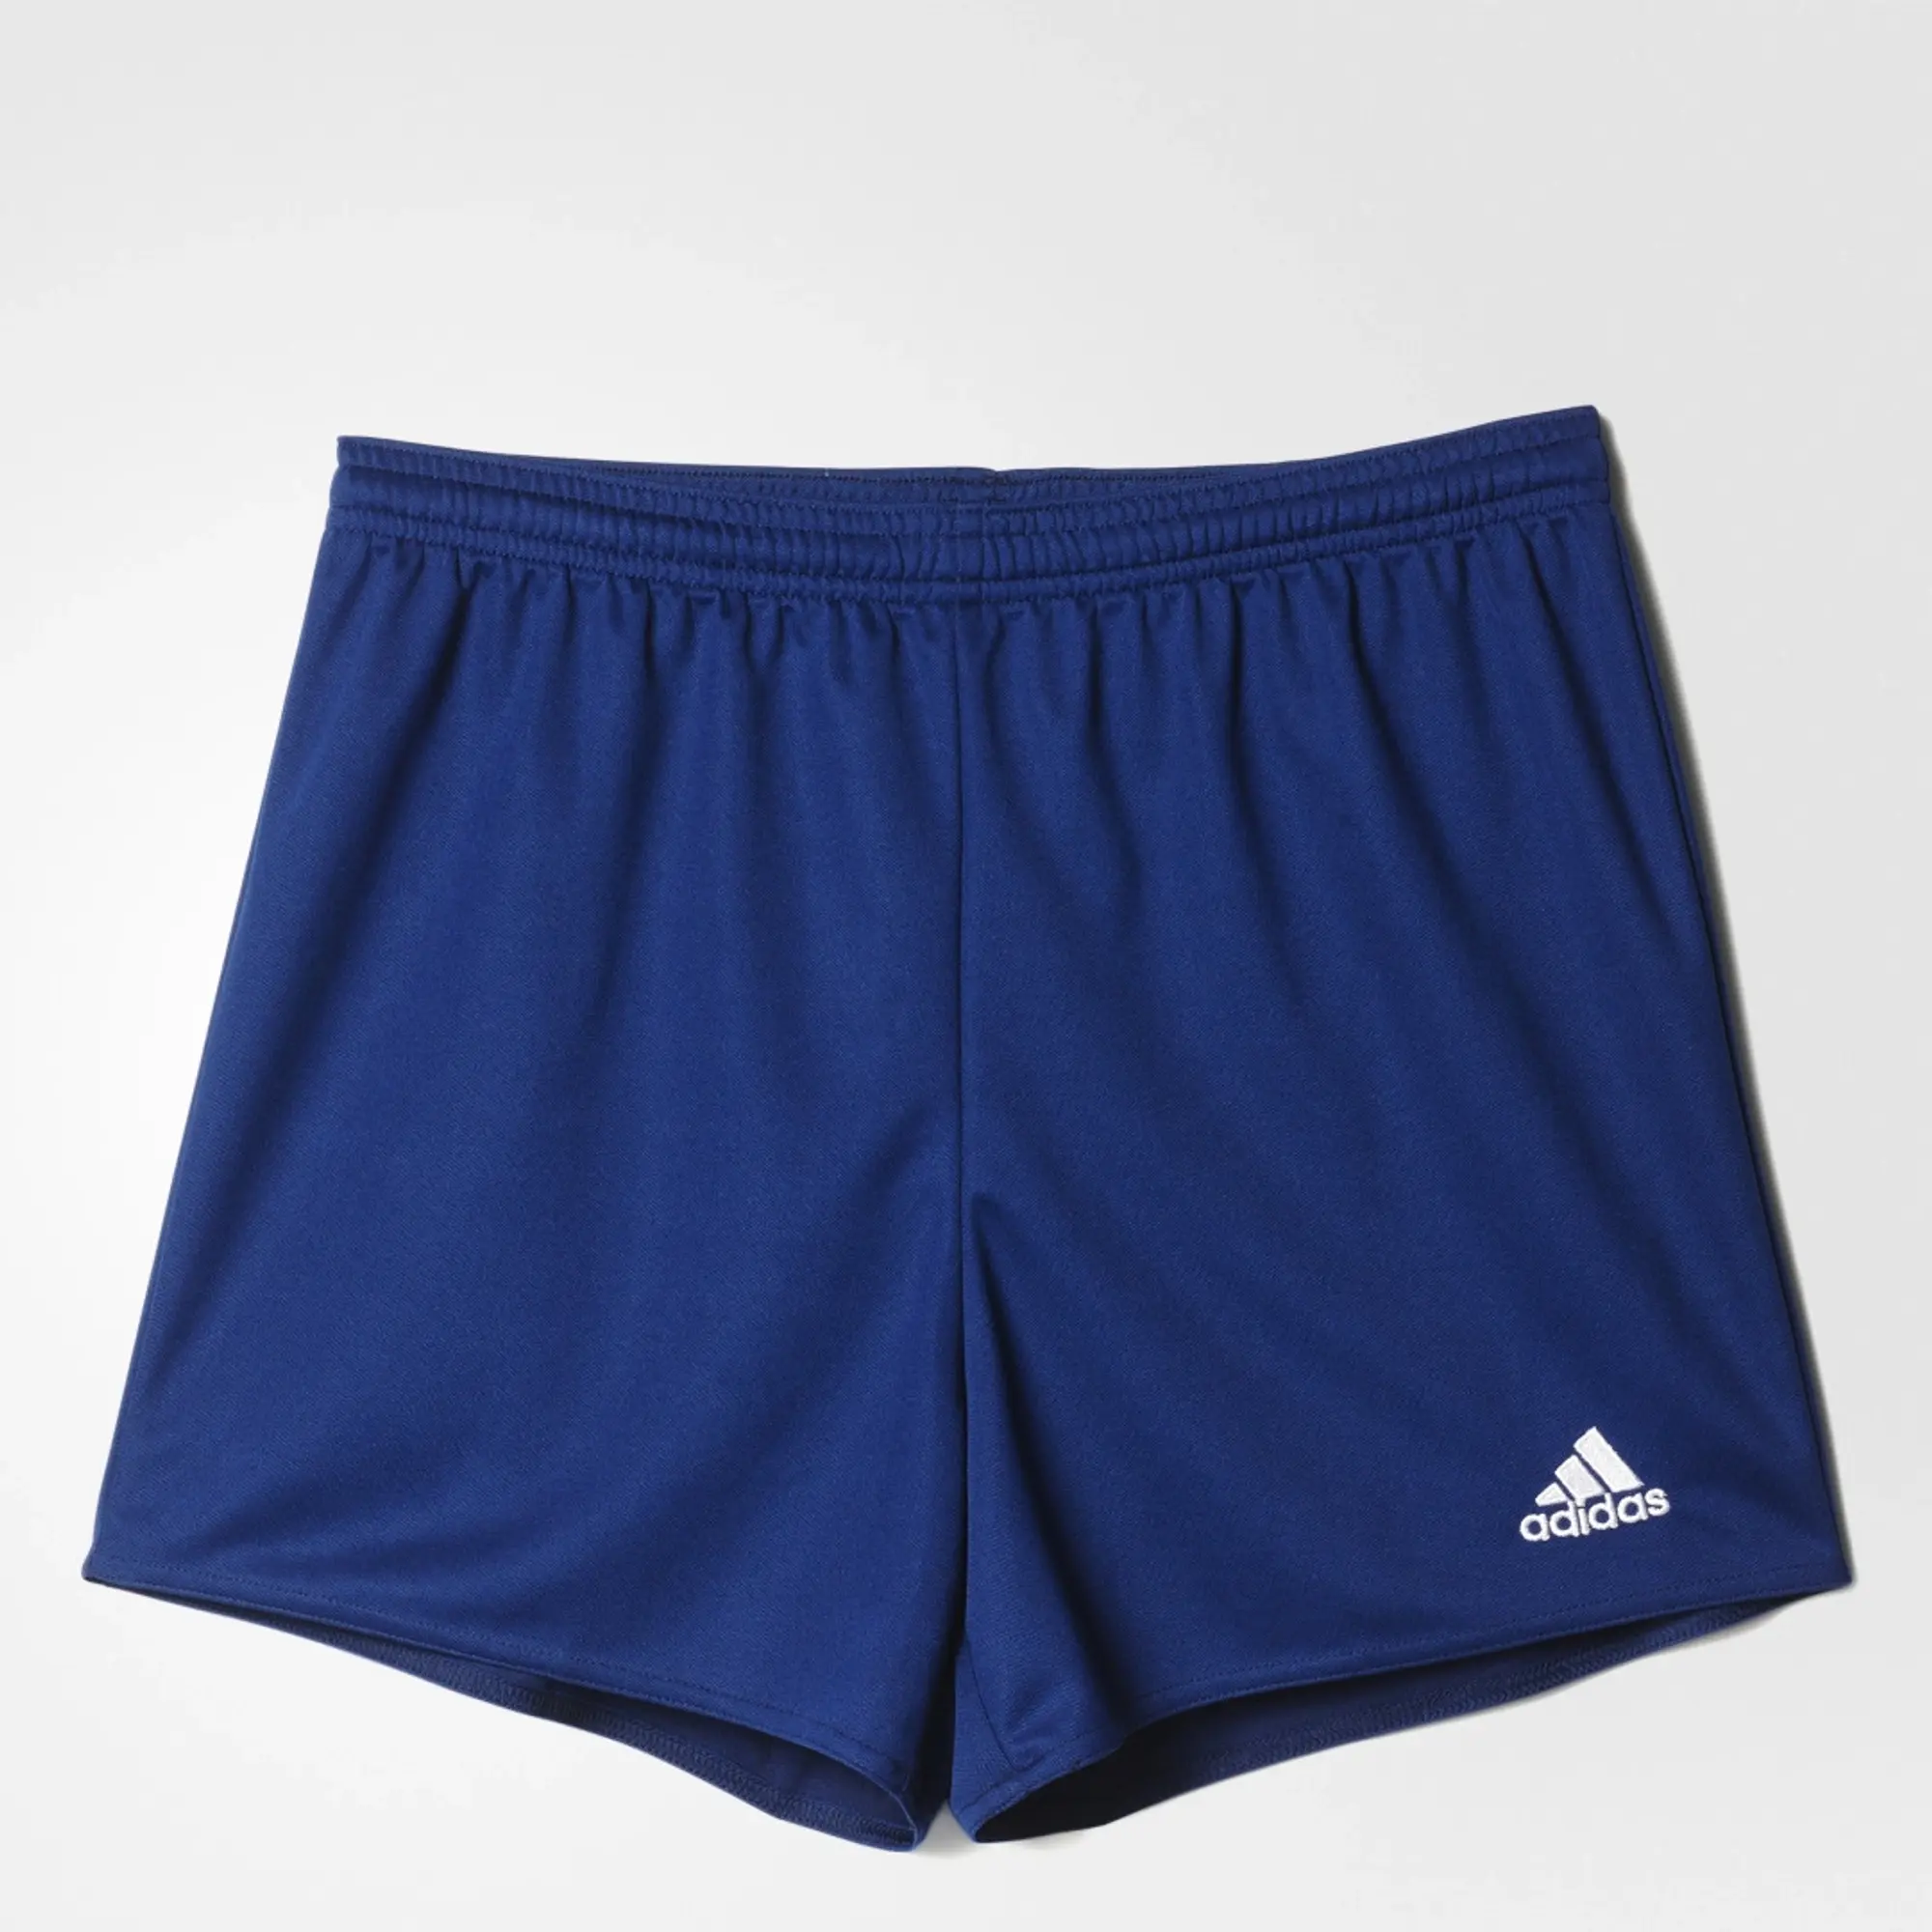 adidas 16 Shorts Womens - Blue